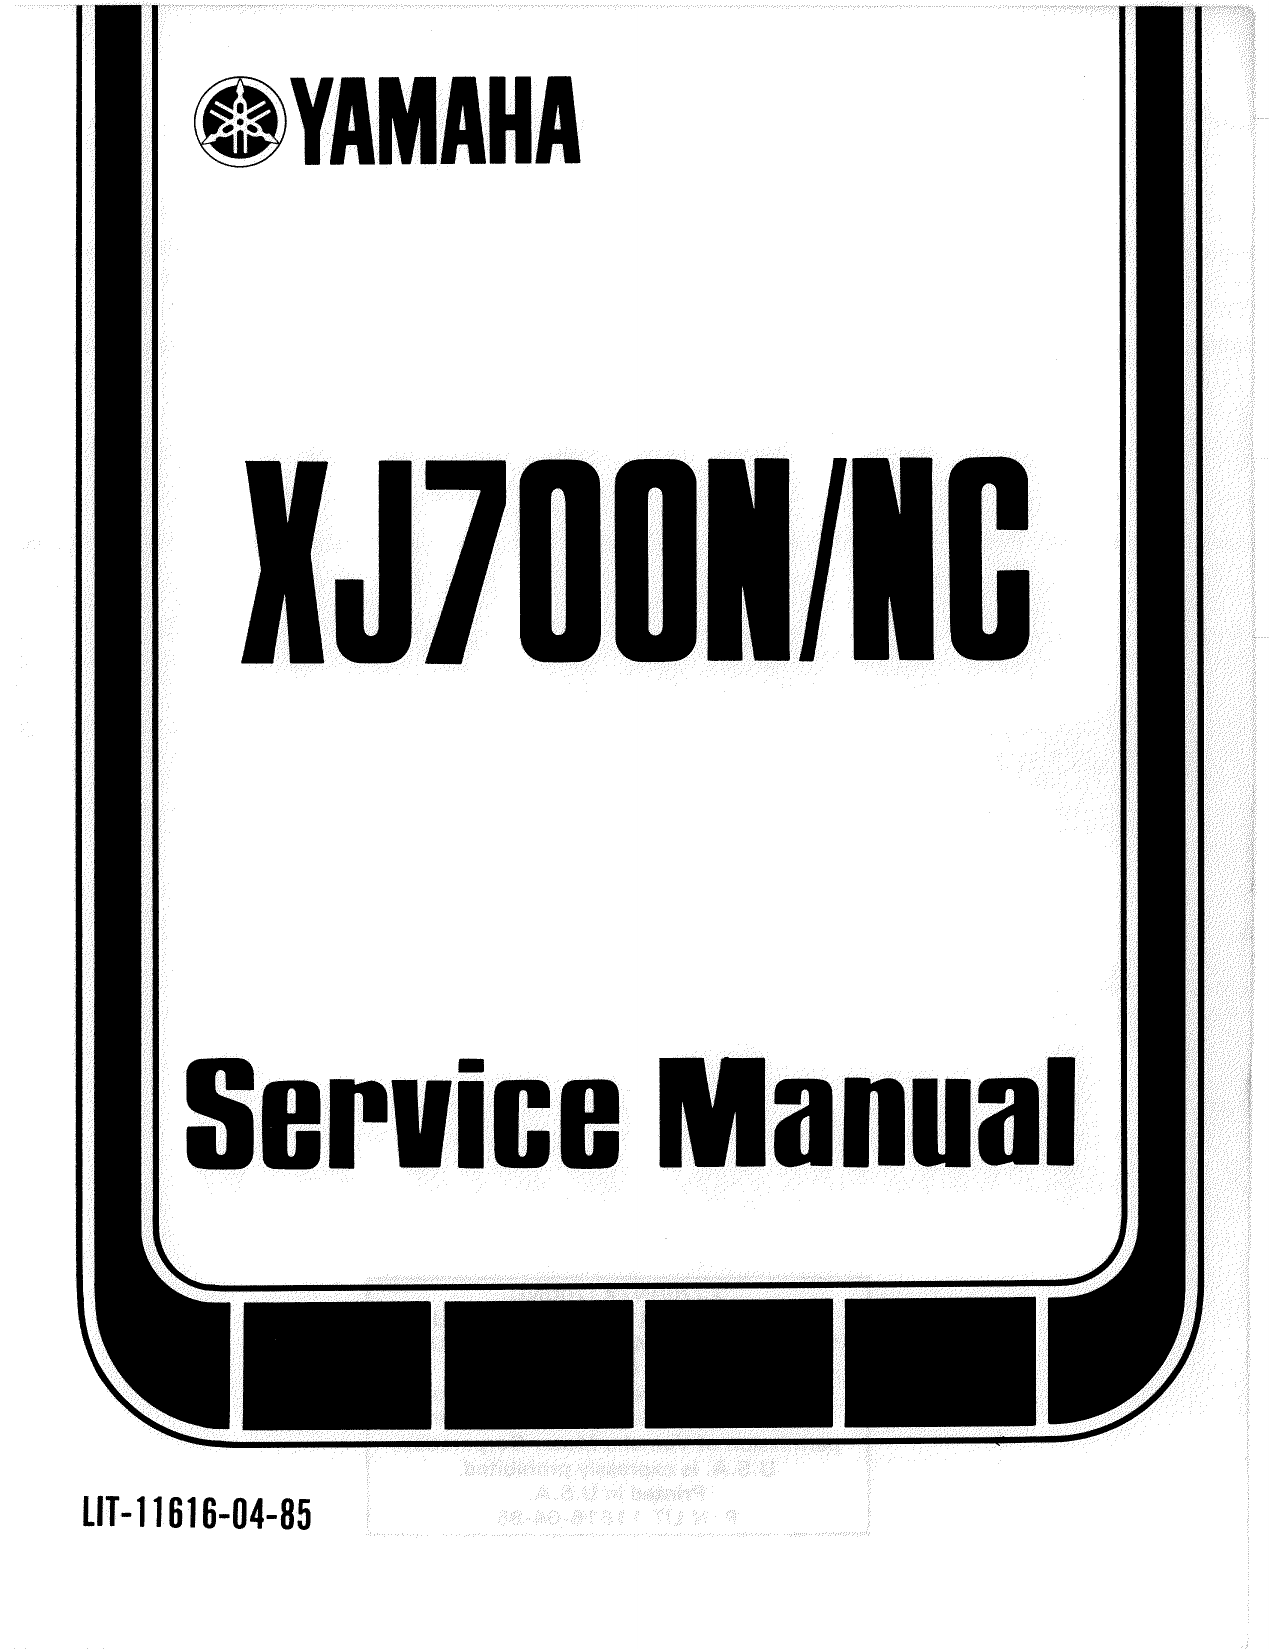 1985-1986 Yamaha XJ700 Maxim-X service, repair manual Preview image 1